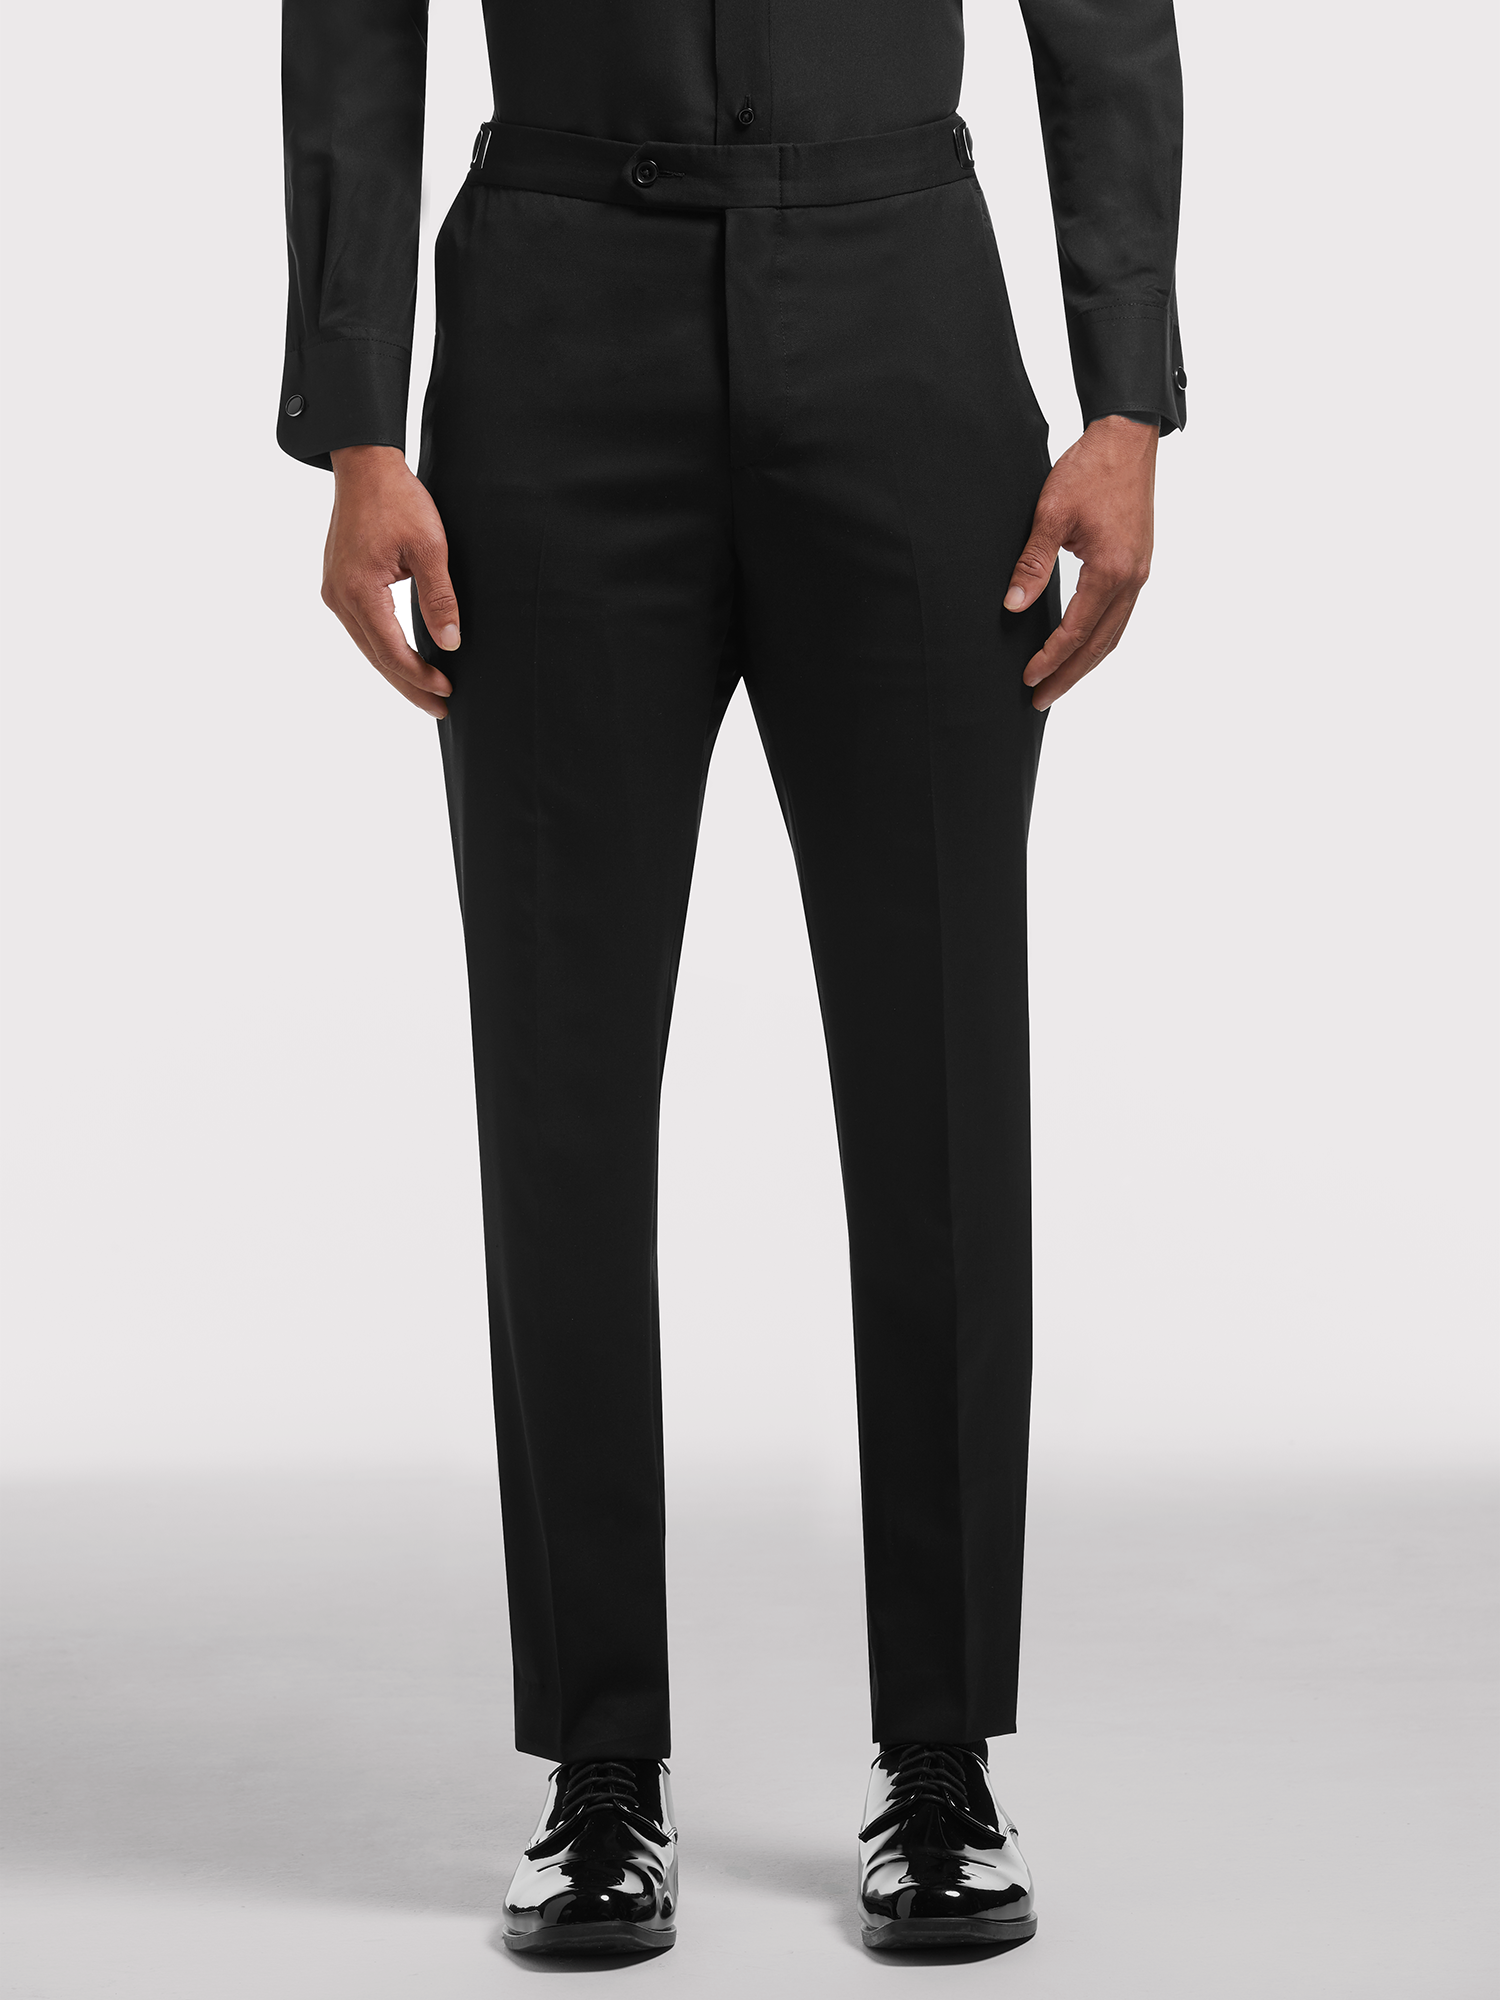 Silver Gray Satin Slim Fit Tuxedo Pants for Women – LITTLE BLACK TUX